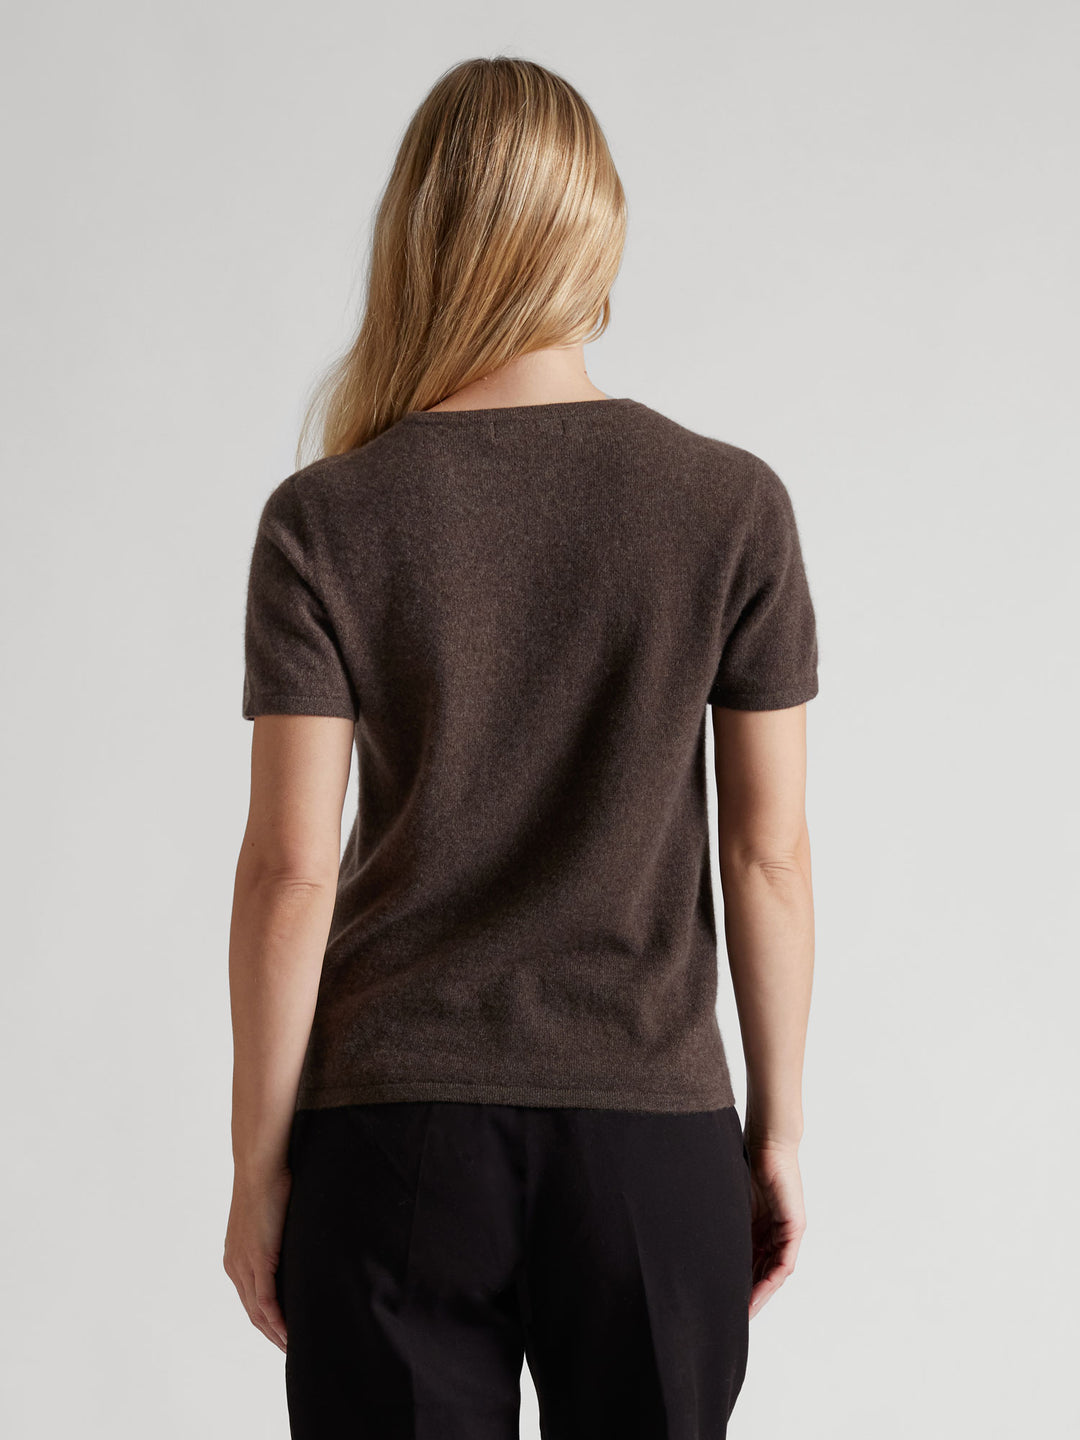 Cashmere t-shirt t-shirt "Fresh", sustainable fashion, luxury, quality. Norwegian design by Kashmina. Color: Dark Brown.